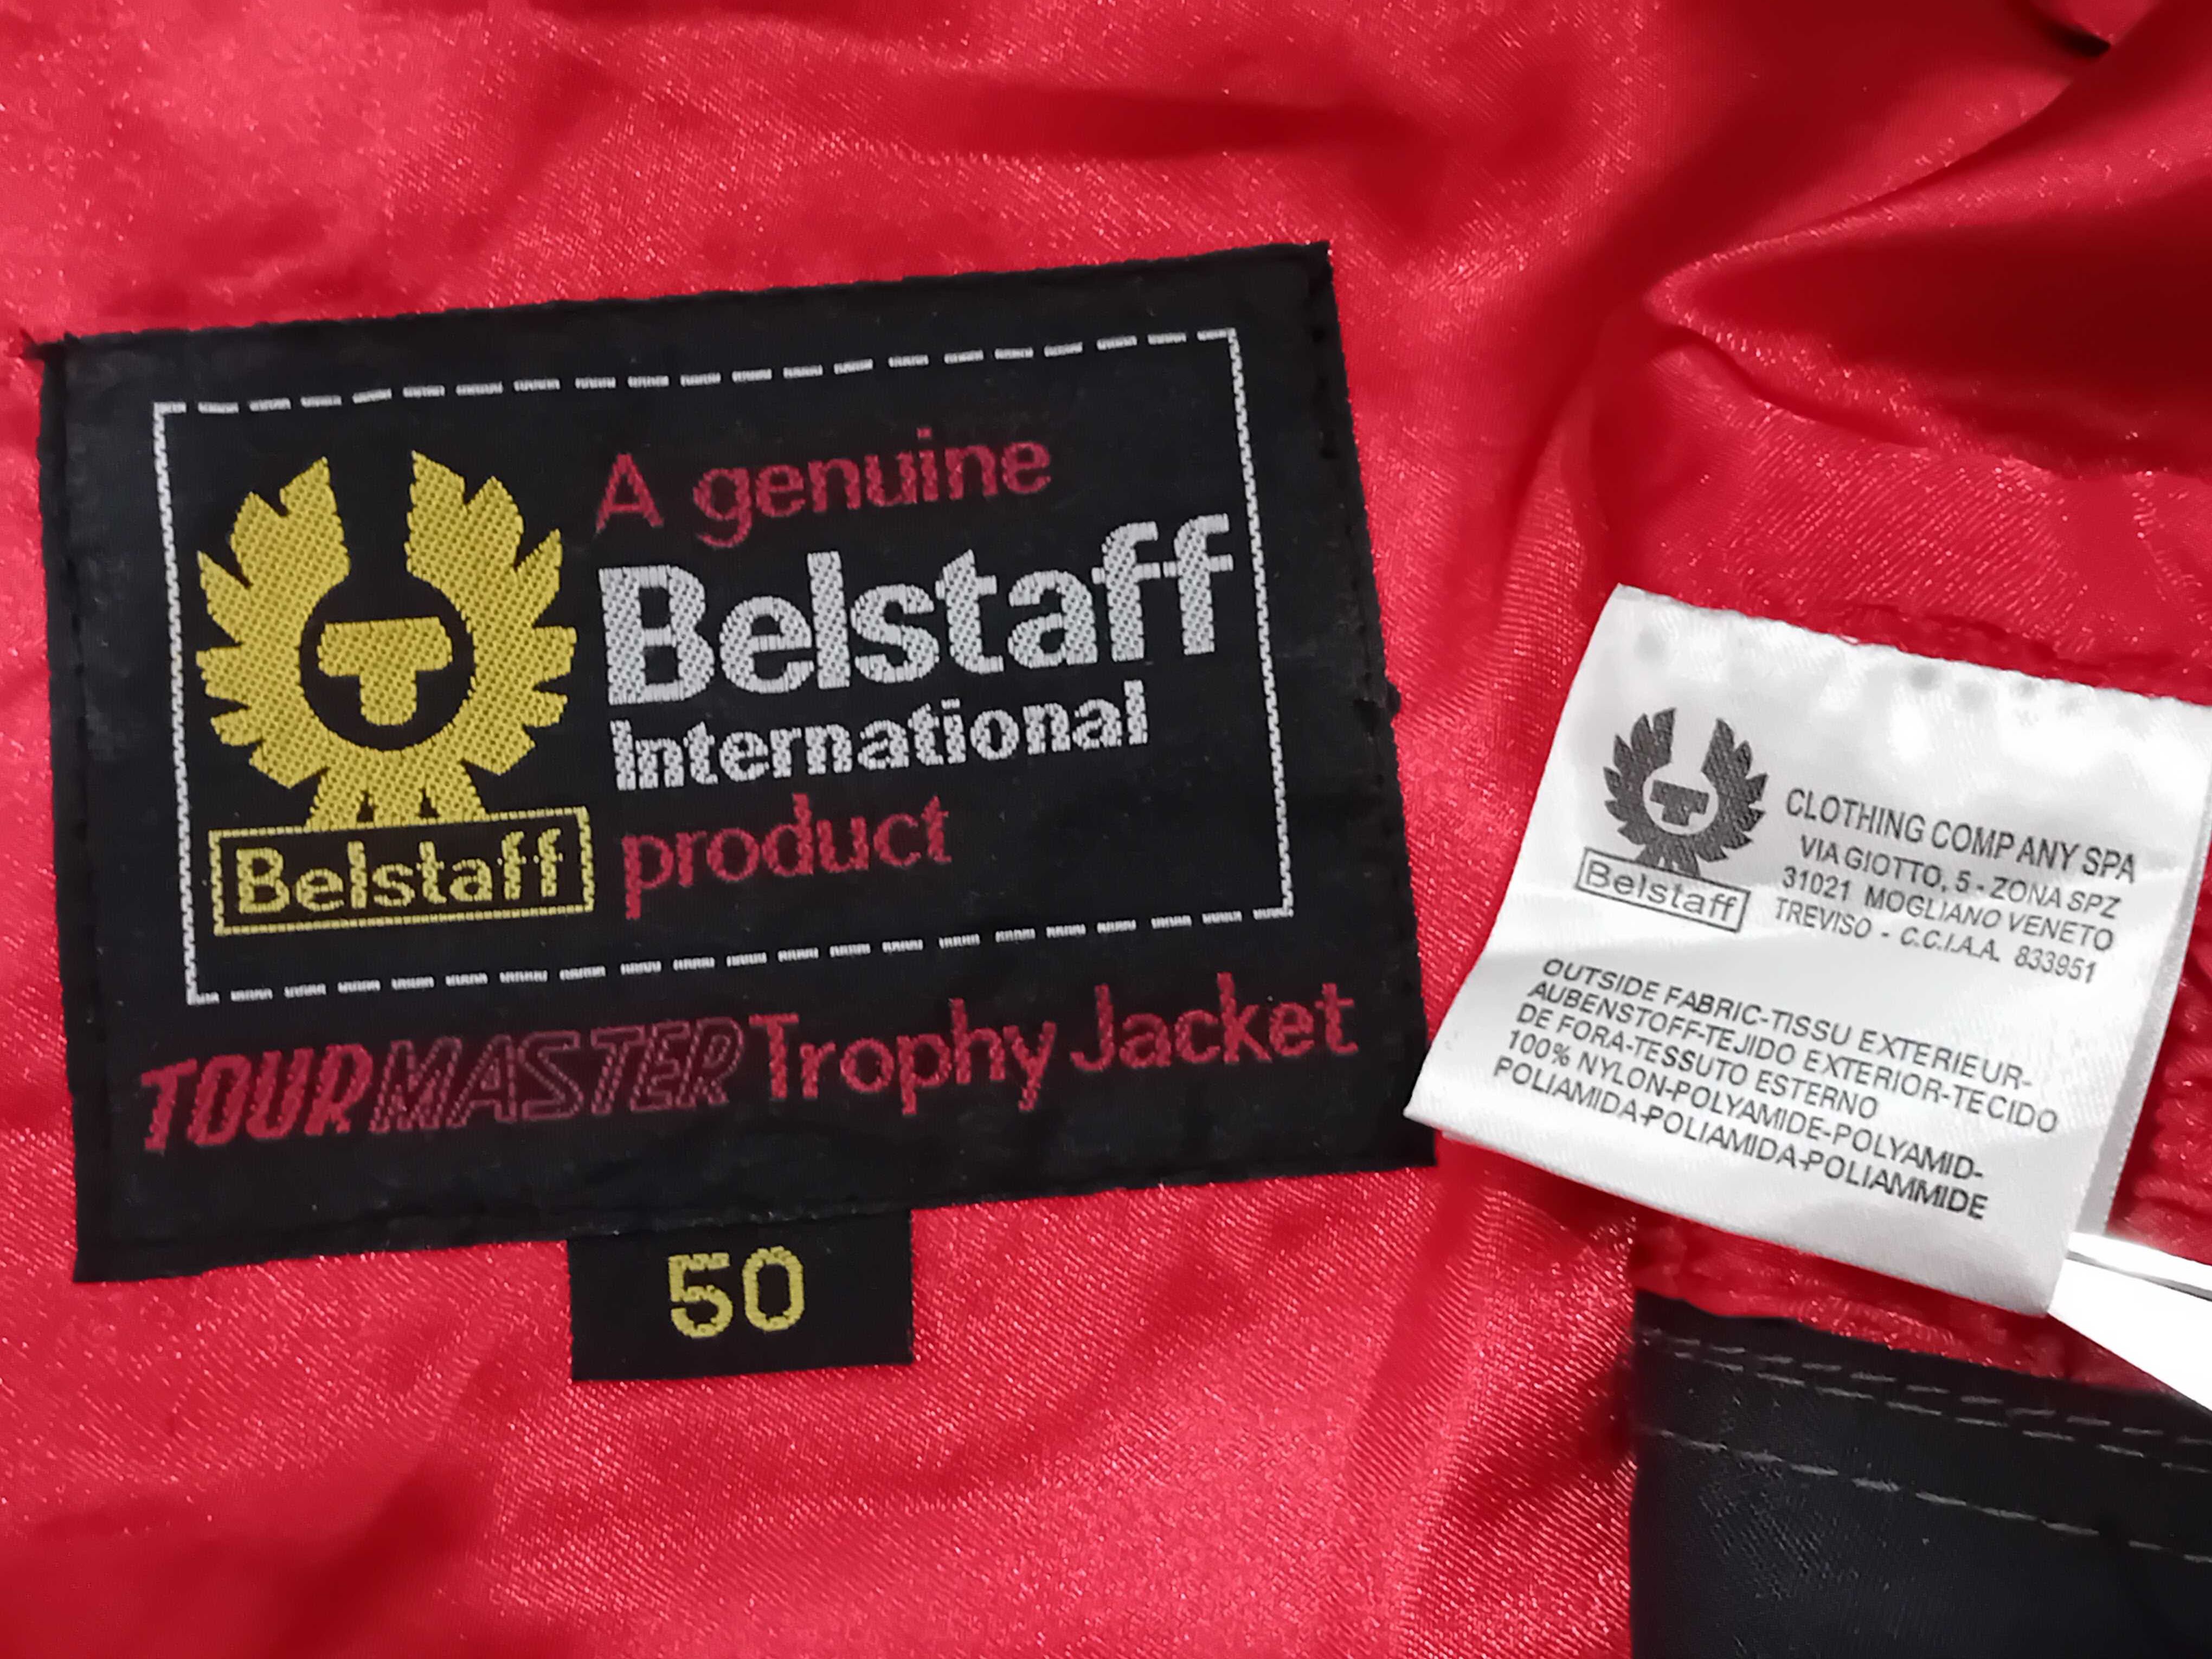 Geacă Belstaff  International – Tour Master Trophy Jacket, 50